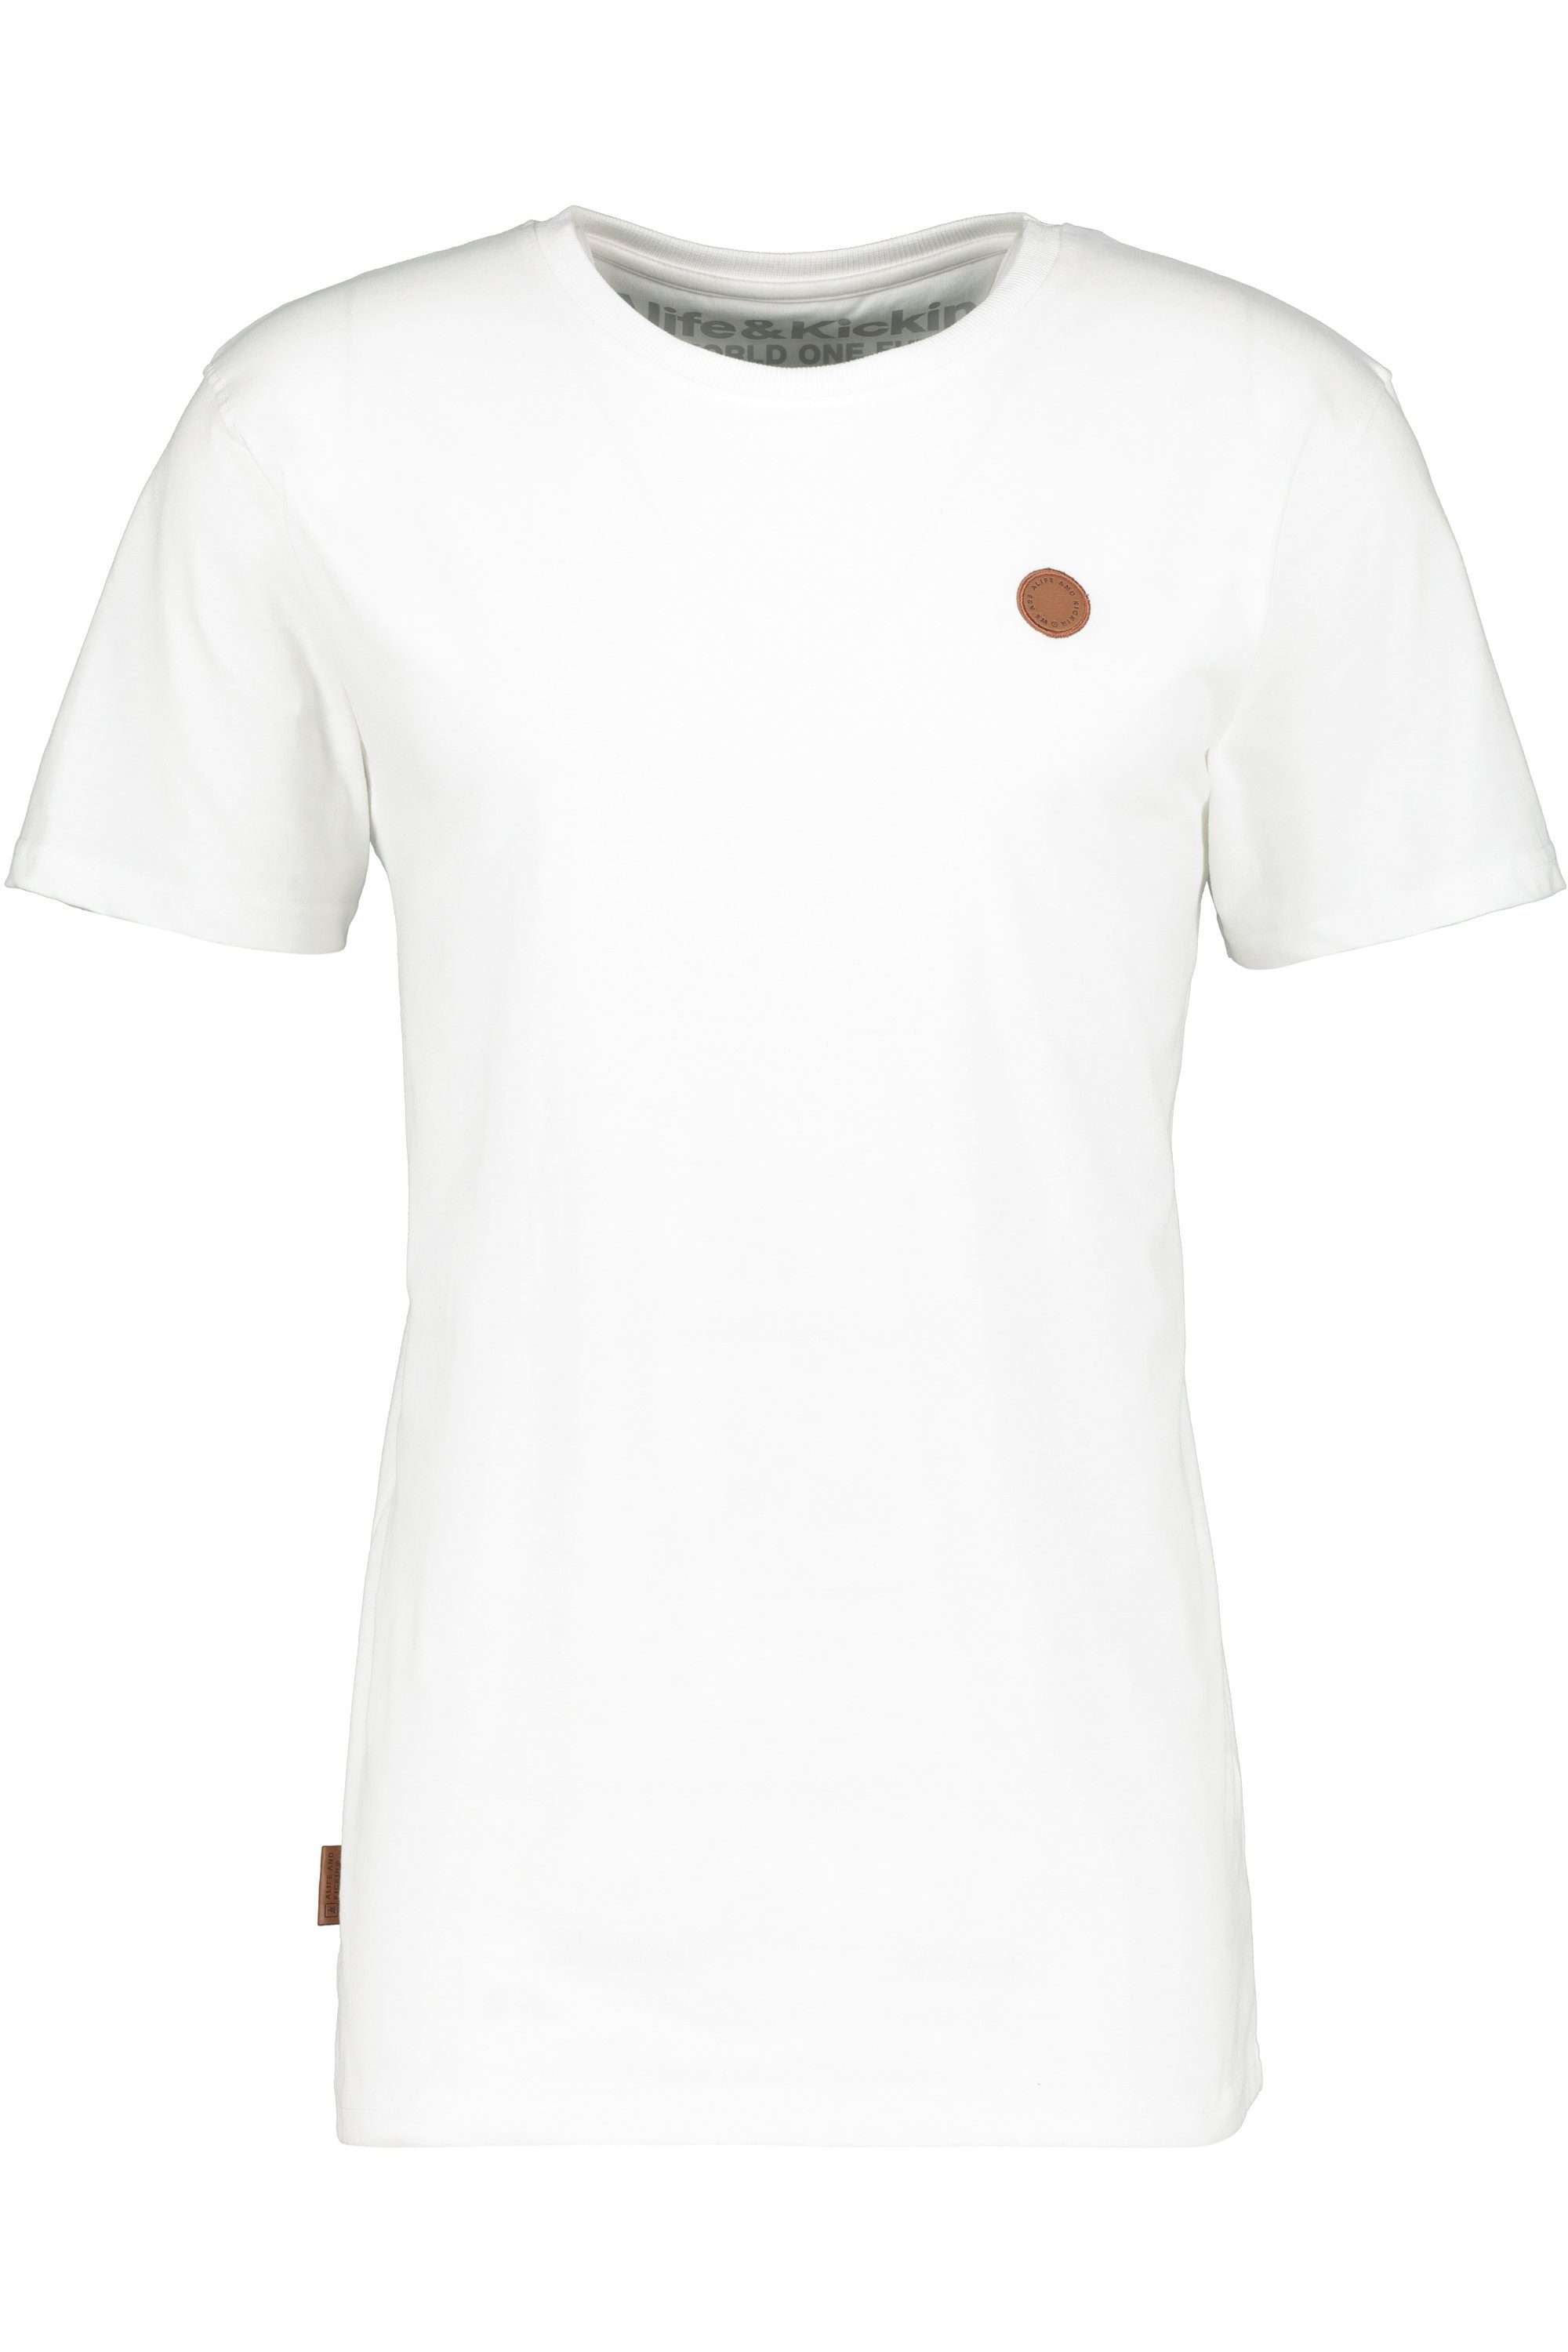 Alife T-Shirt Herren MatsAK cloudy & T-Shirt Kickin